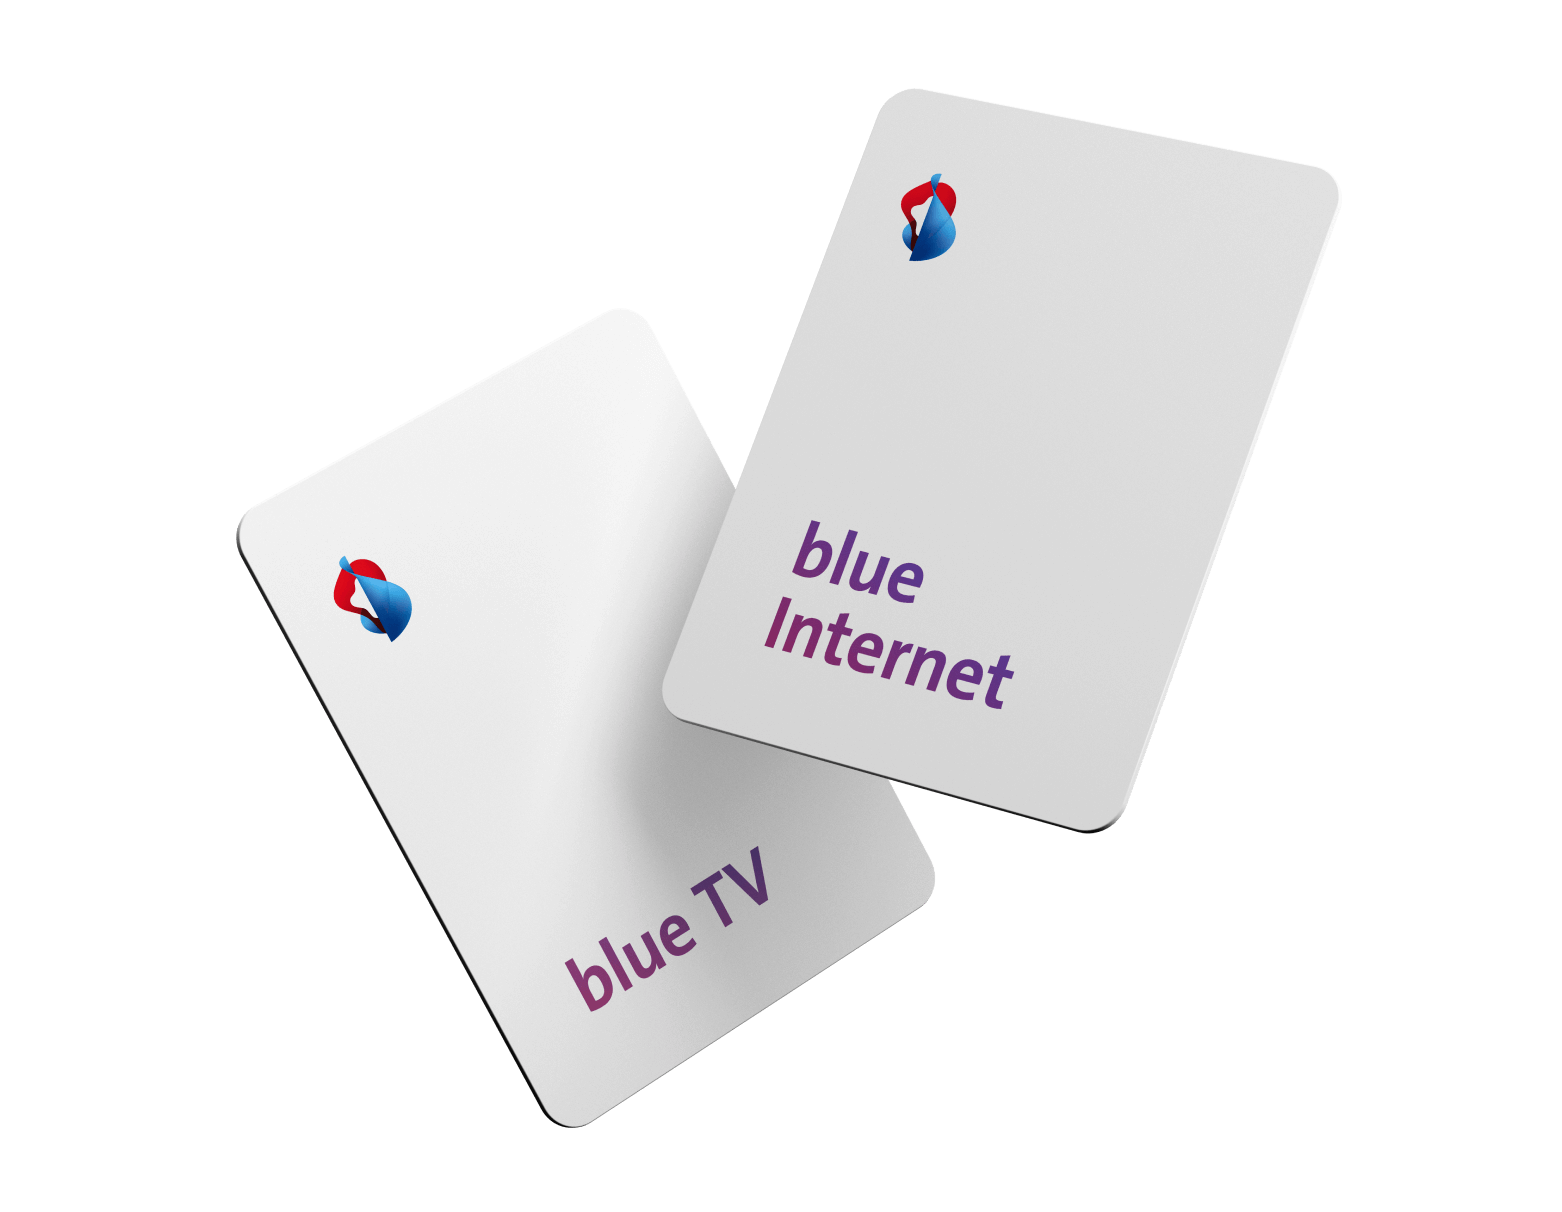 blue TV & blue Internet